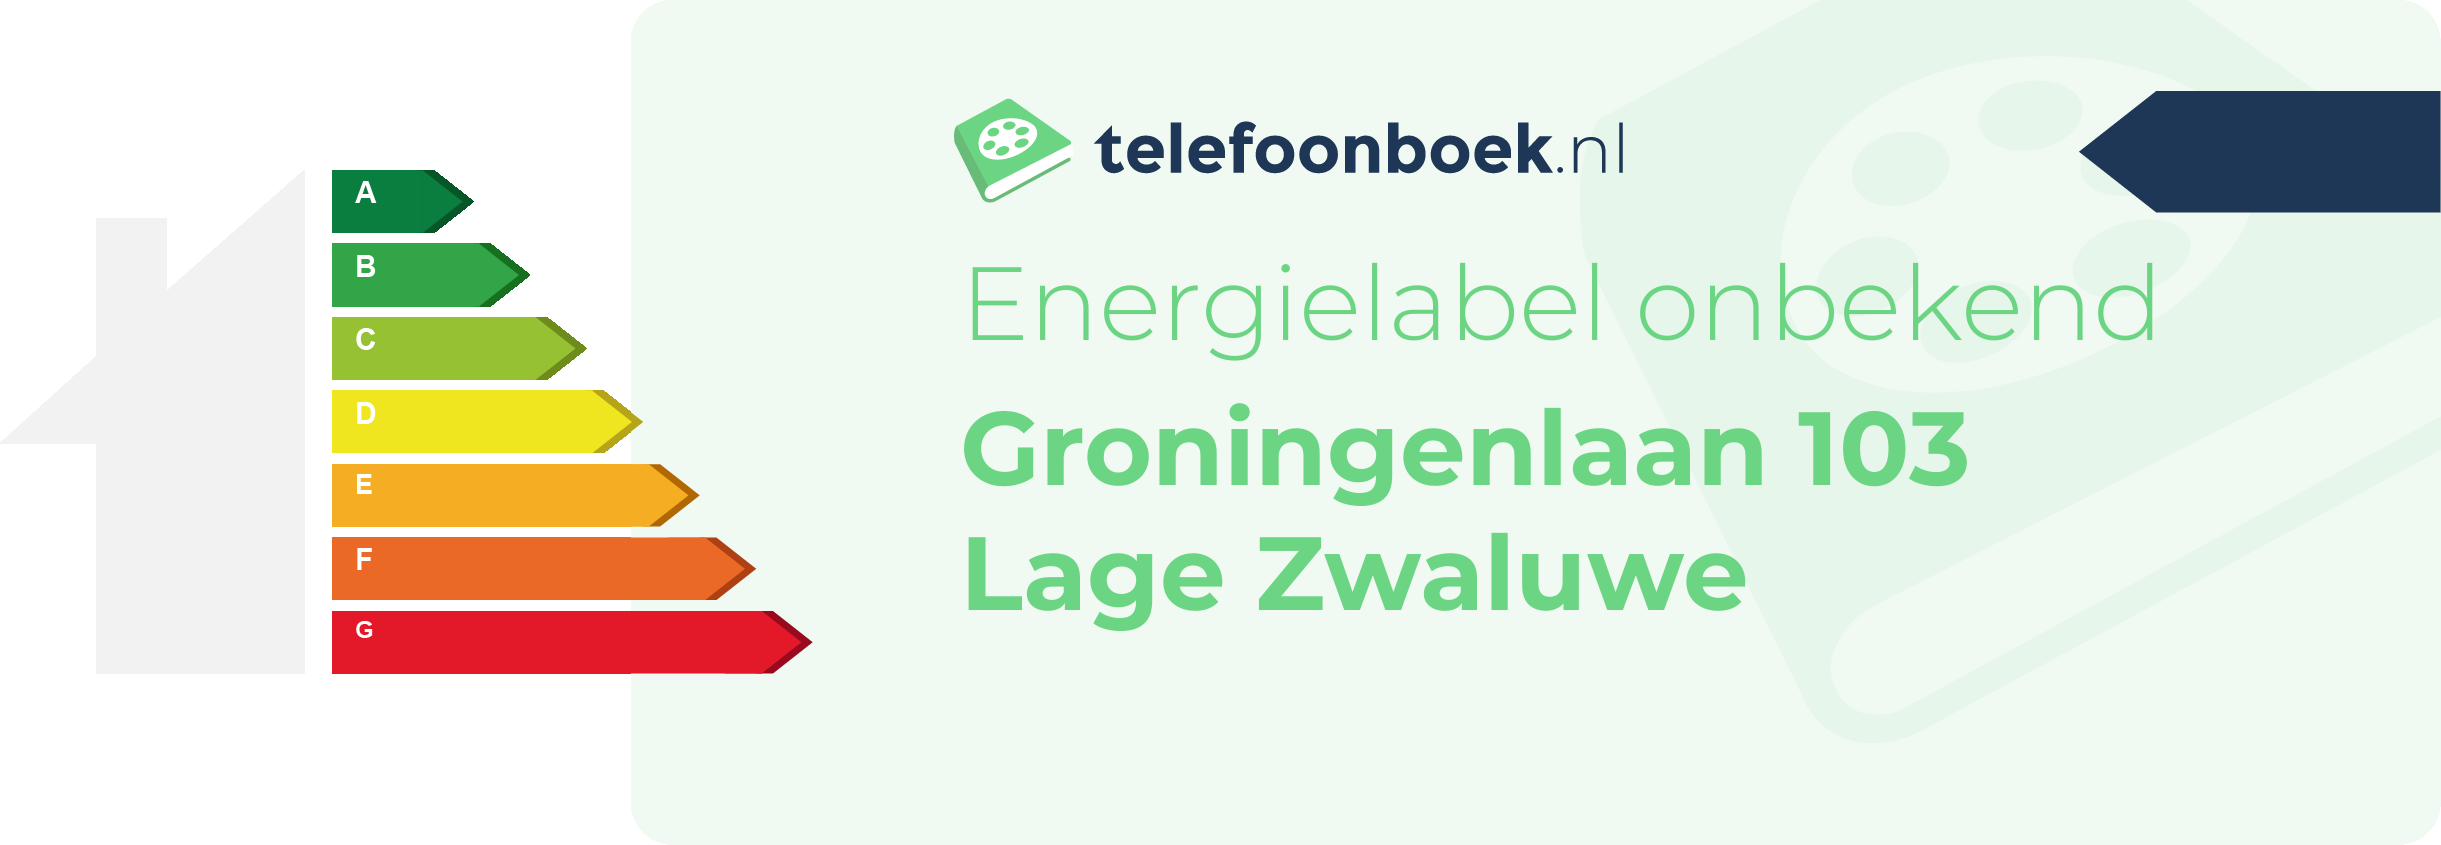 Energielabel Groningenlaan 103 Lage Zwaluwe